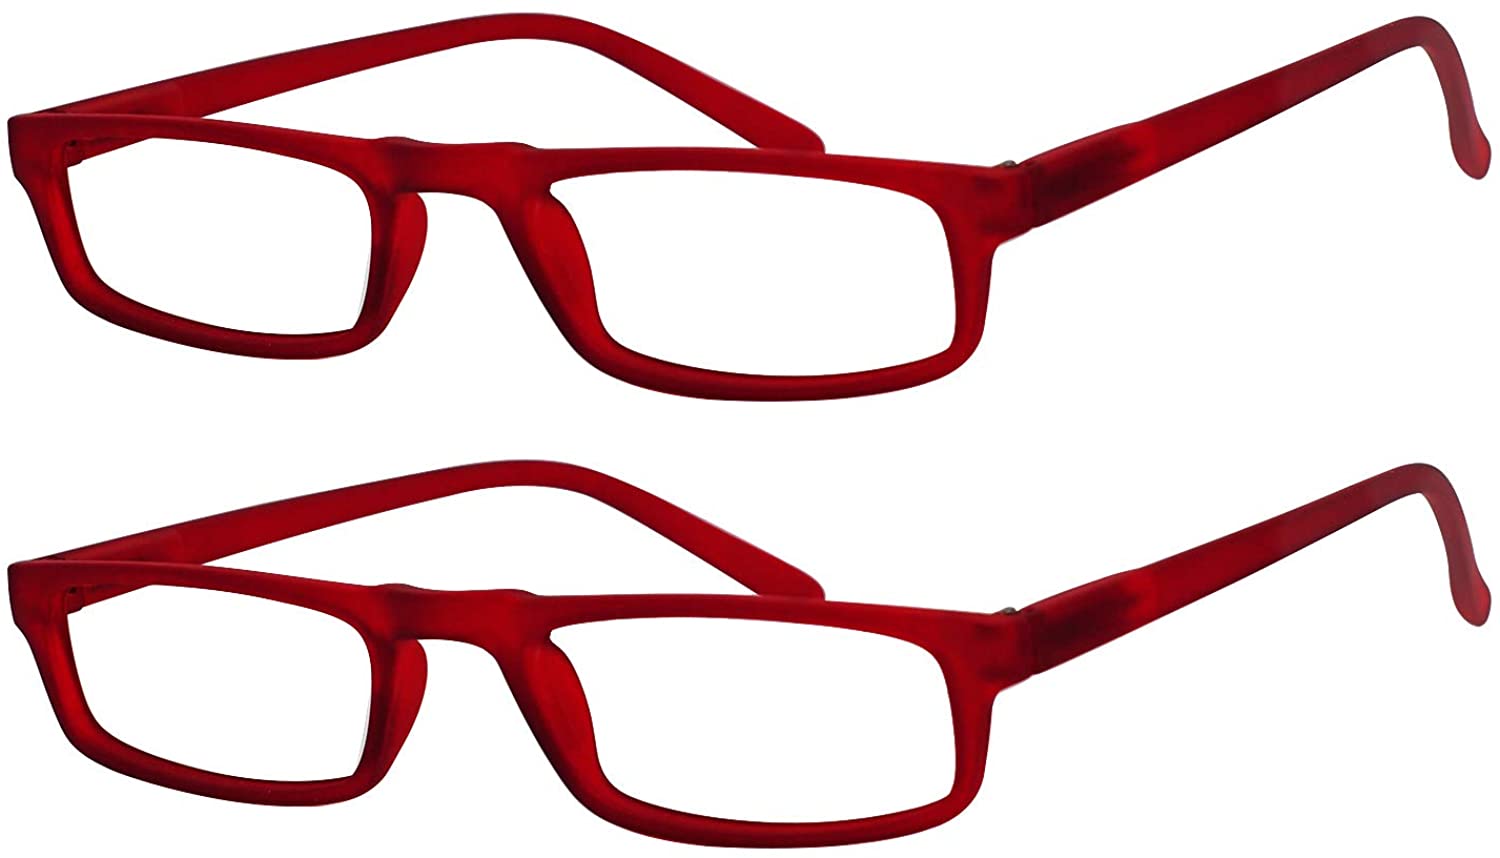 OCCI CHIARI Reading Glasses Women Men's Reader 1.0 1.25 1.5 1.75 2.0 2.5 to 3.5 